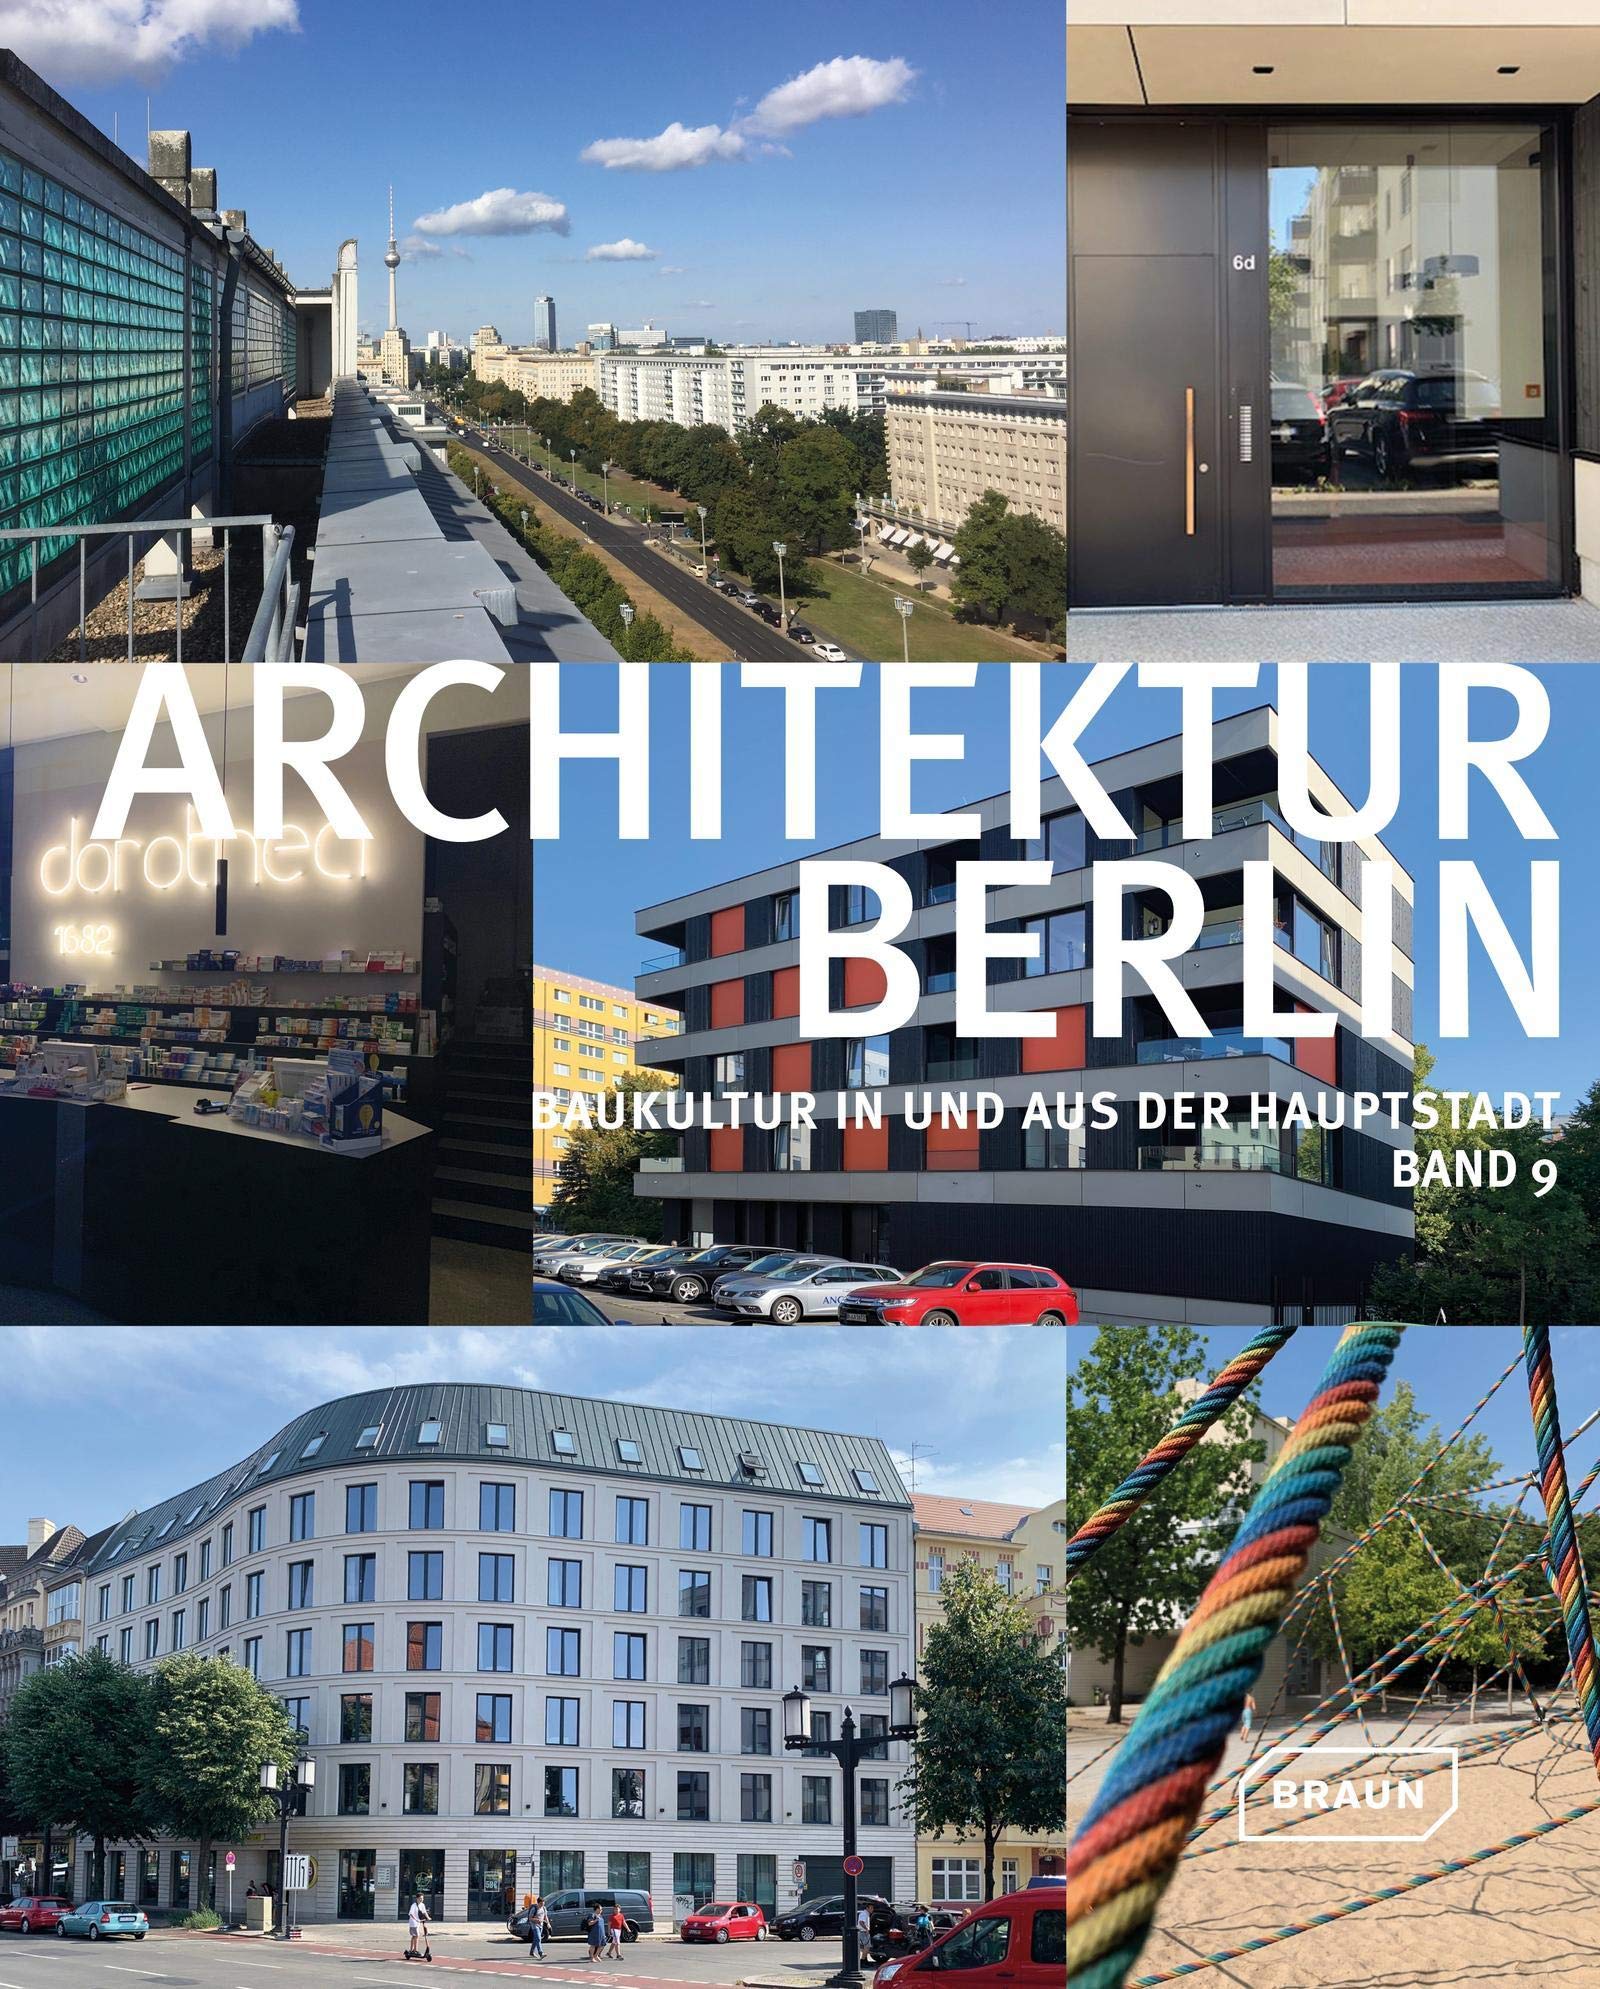 Building Berlin, Vol. 9